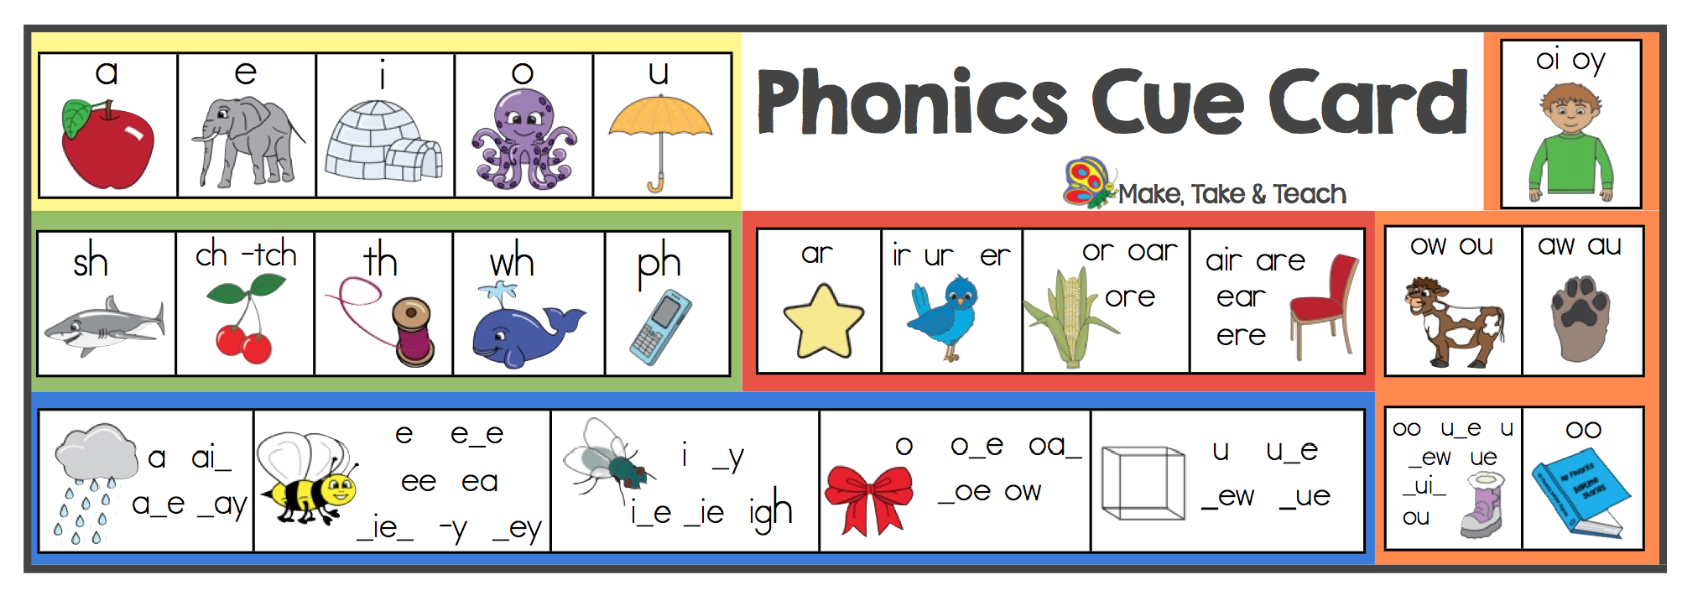 Free Phonics Cue Card Make Take Teach